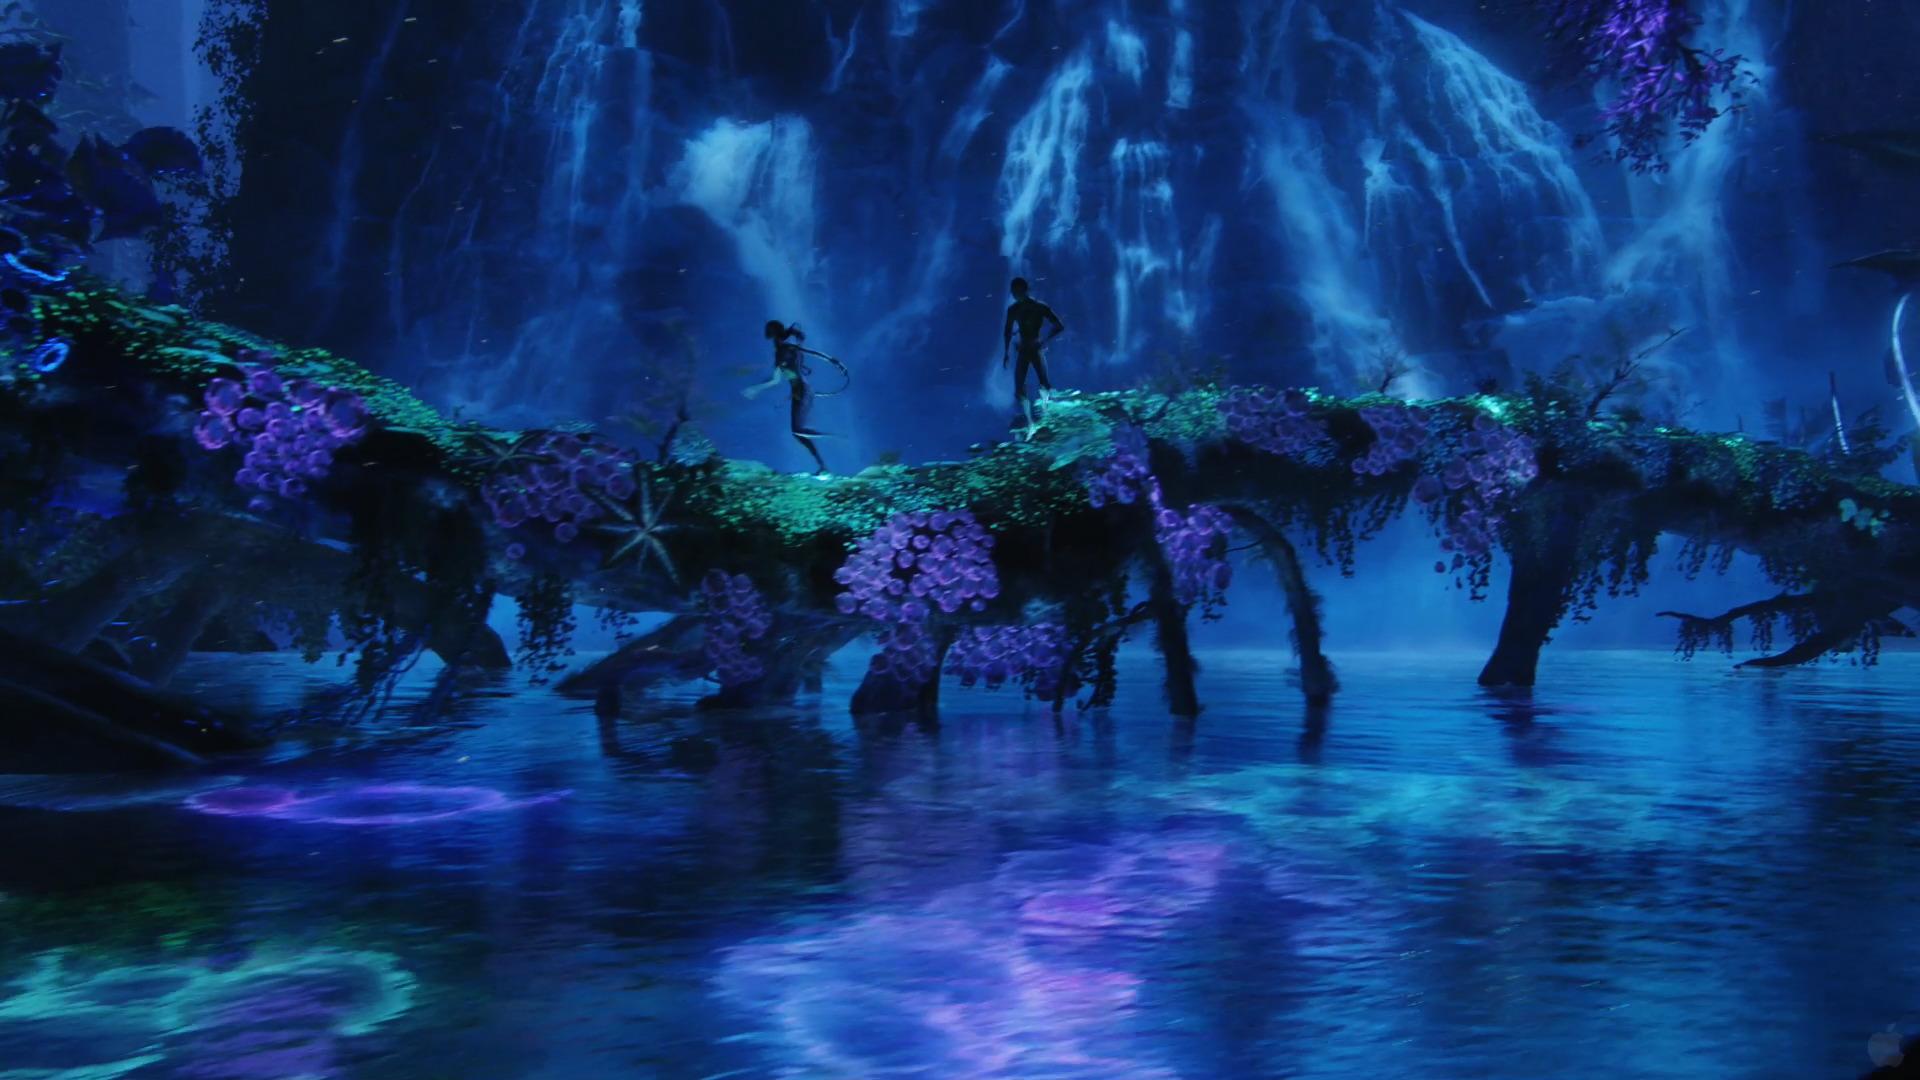 Avatar Explore Pandora Immersive Exhibition Coming to Shanghai Disneyland   TDR Explorer